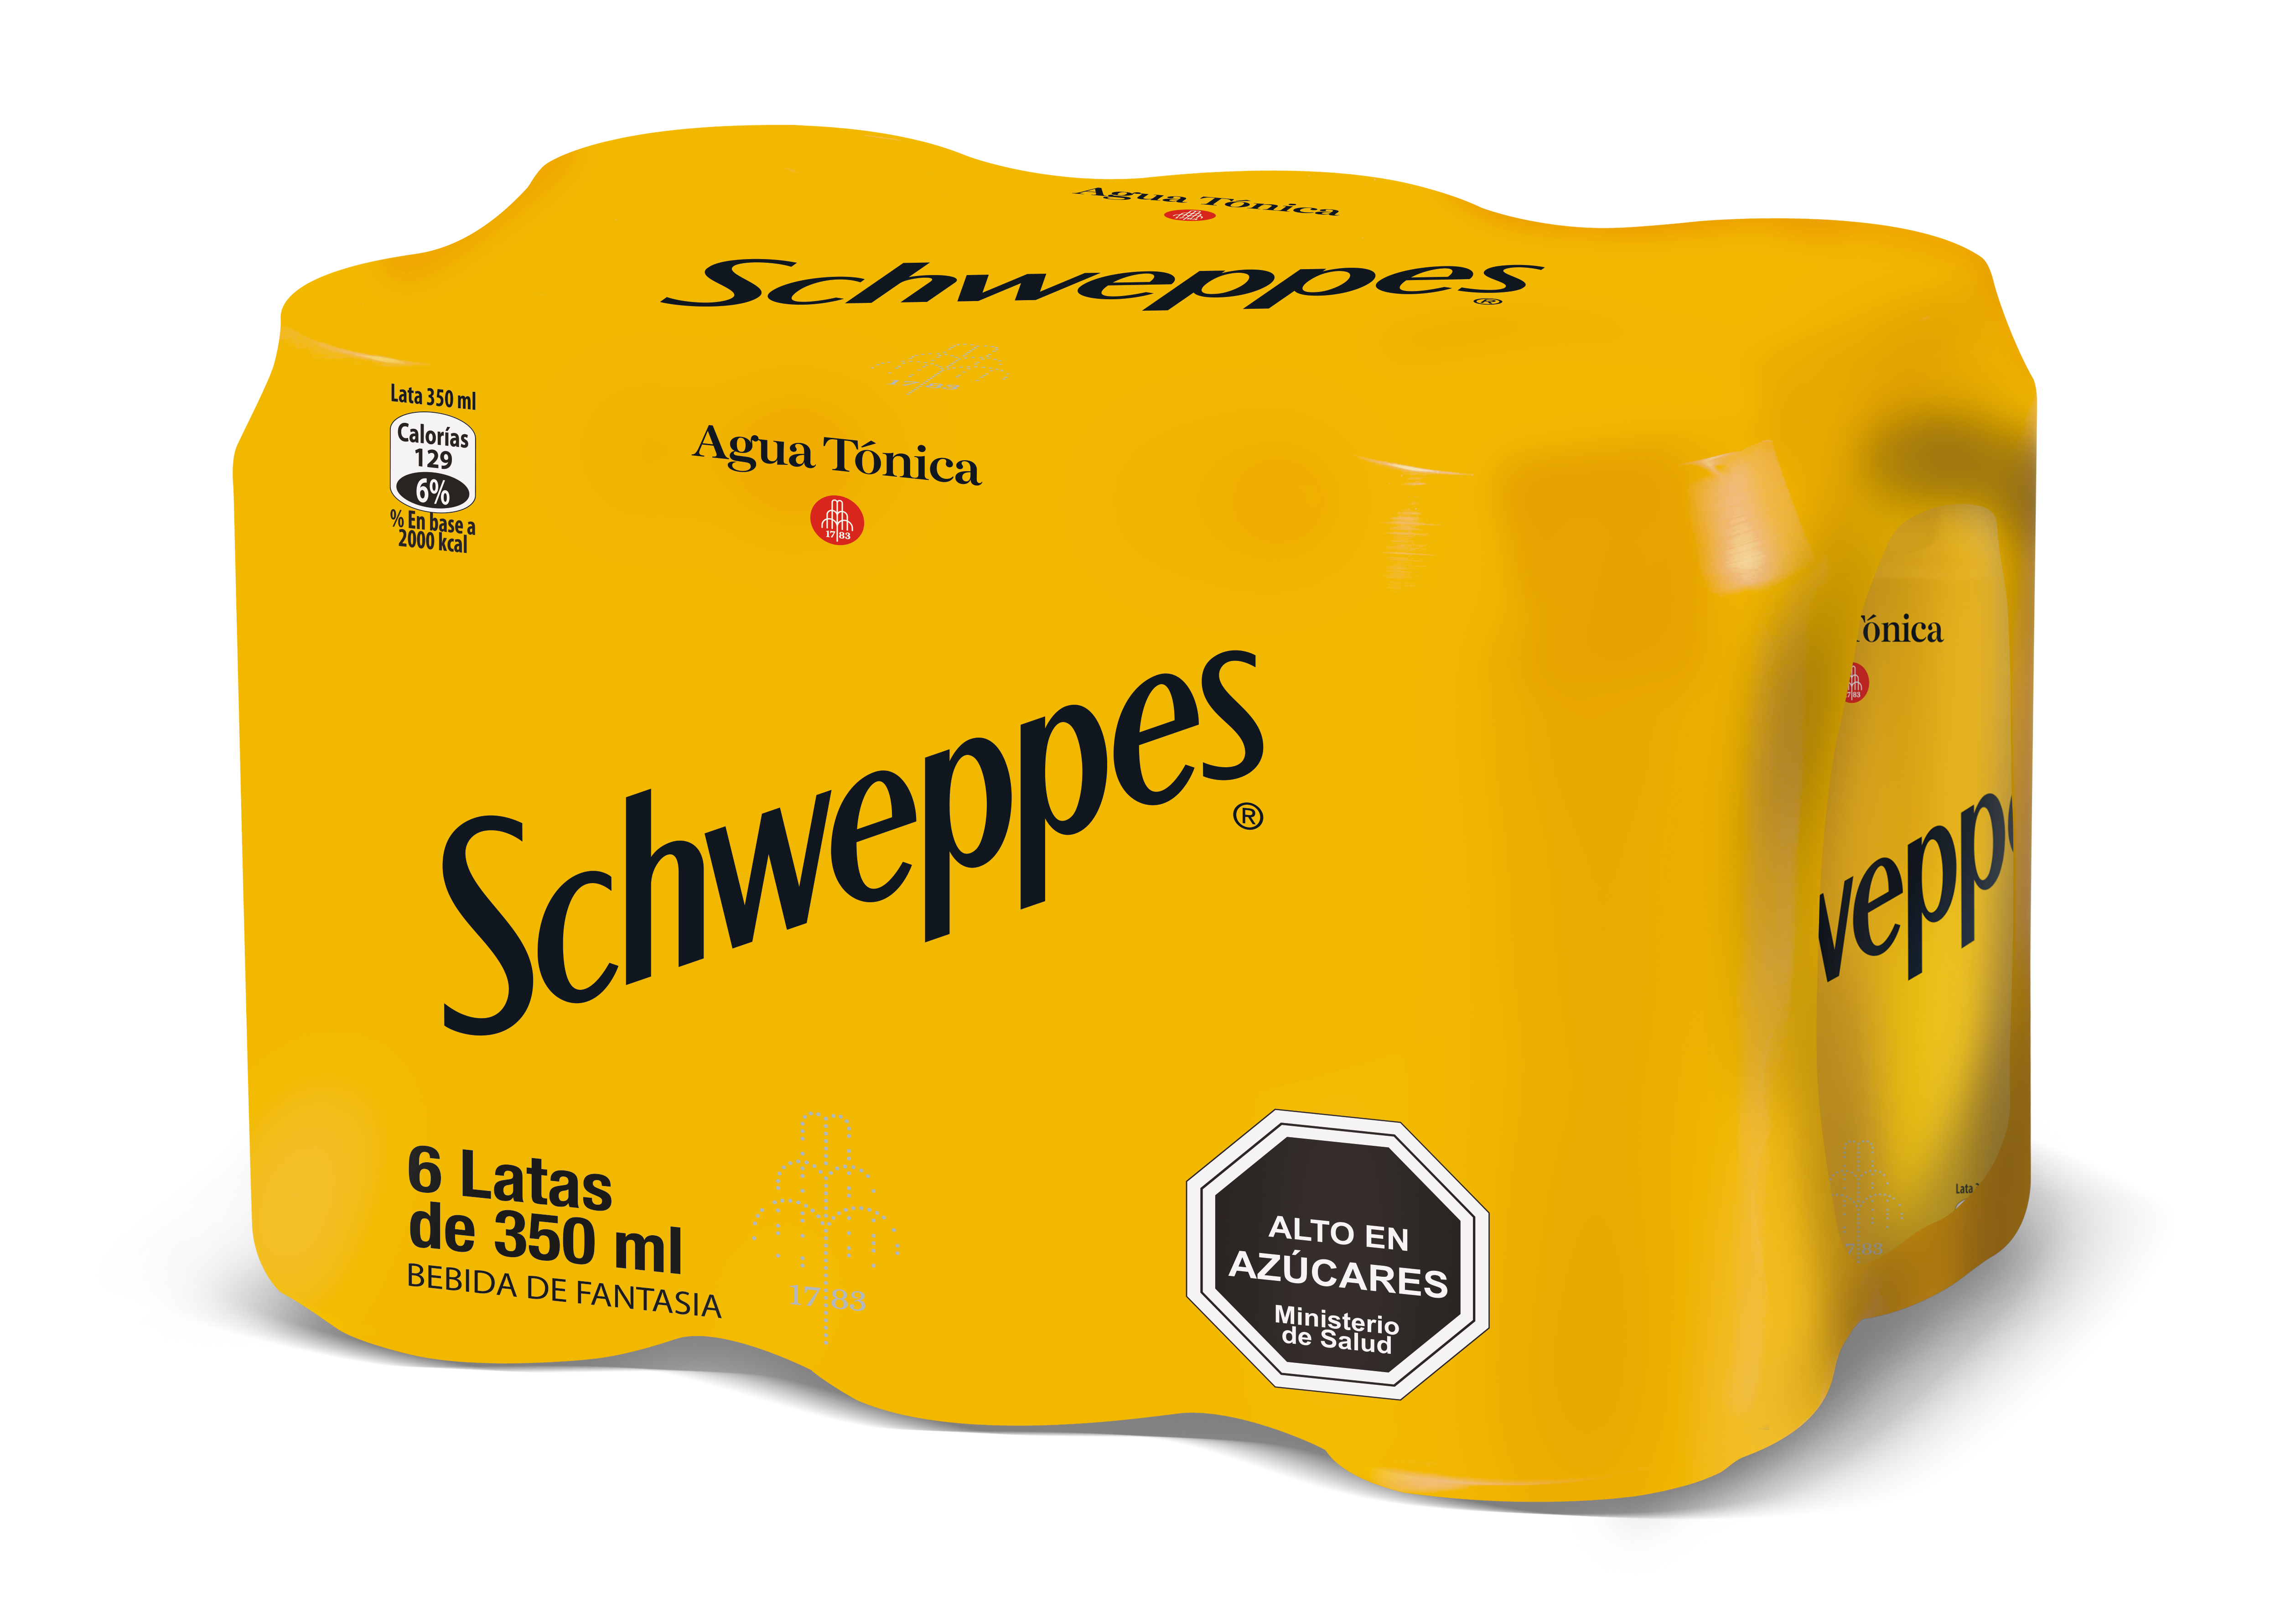 Sixpack de Schweppes Tónica